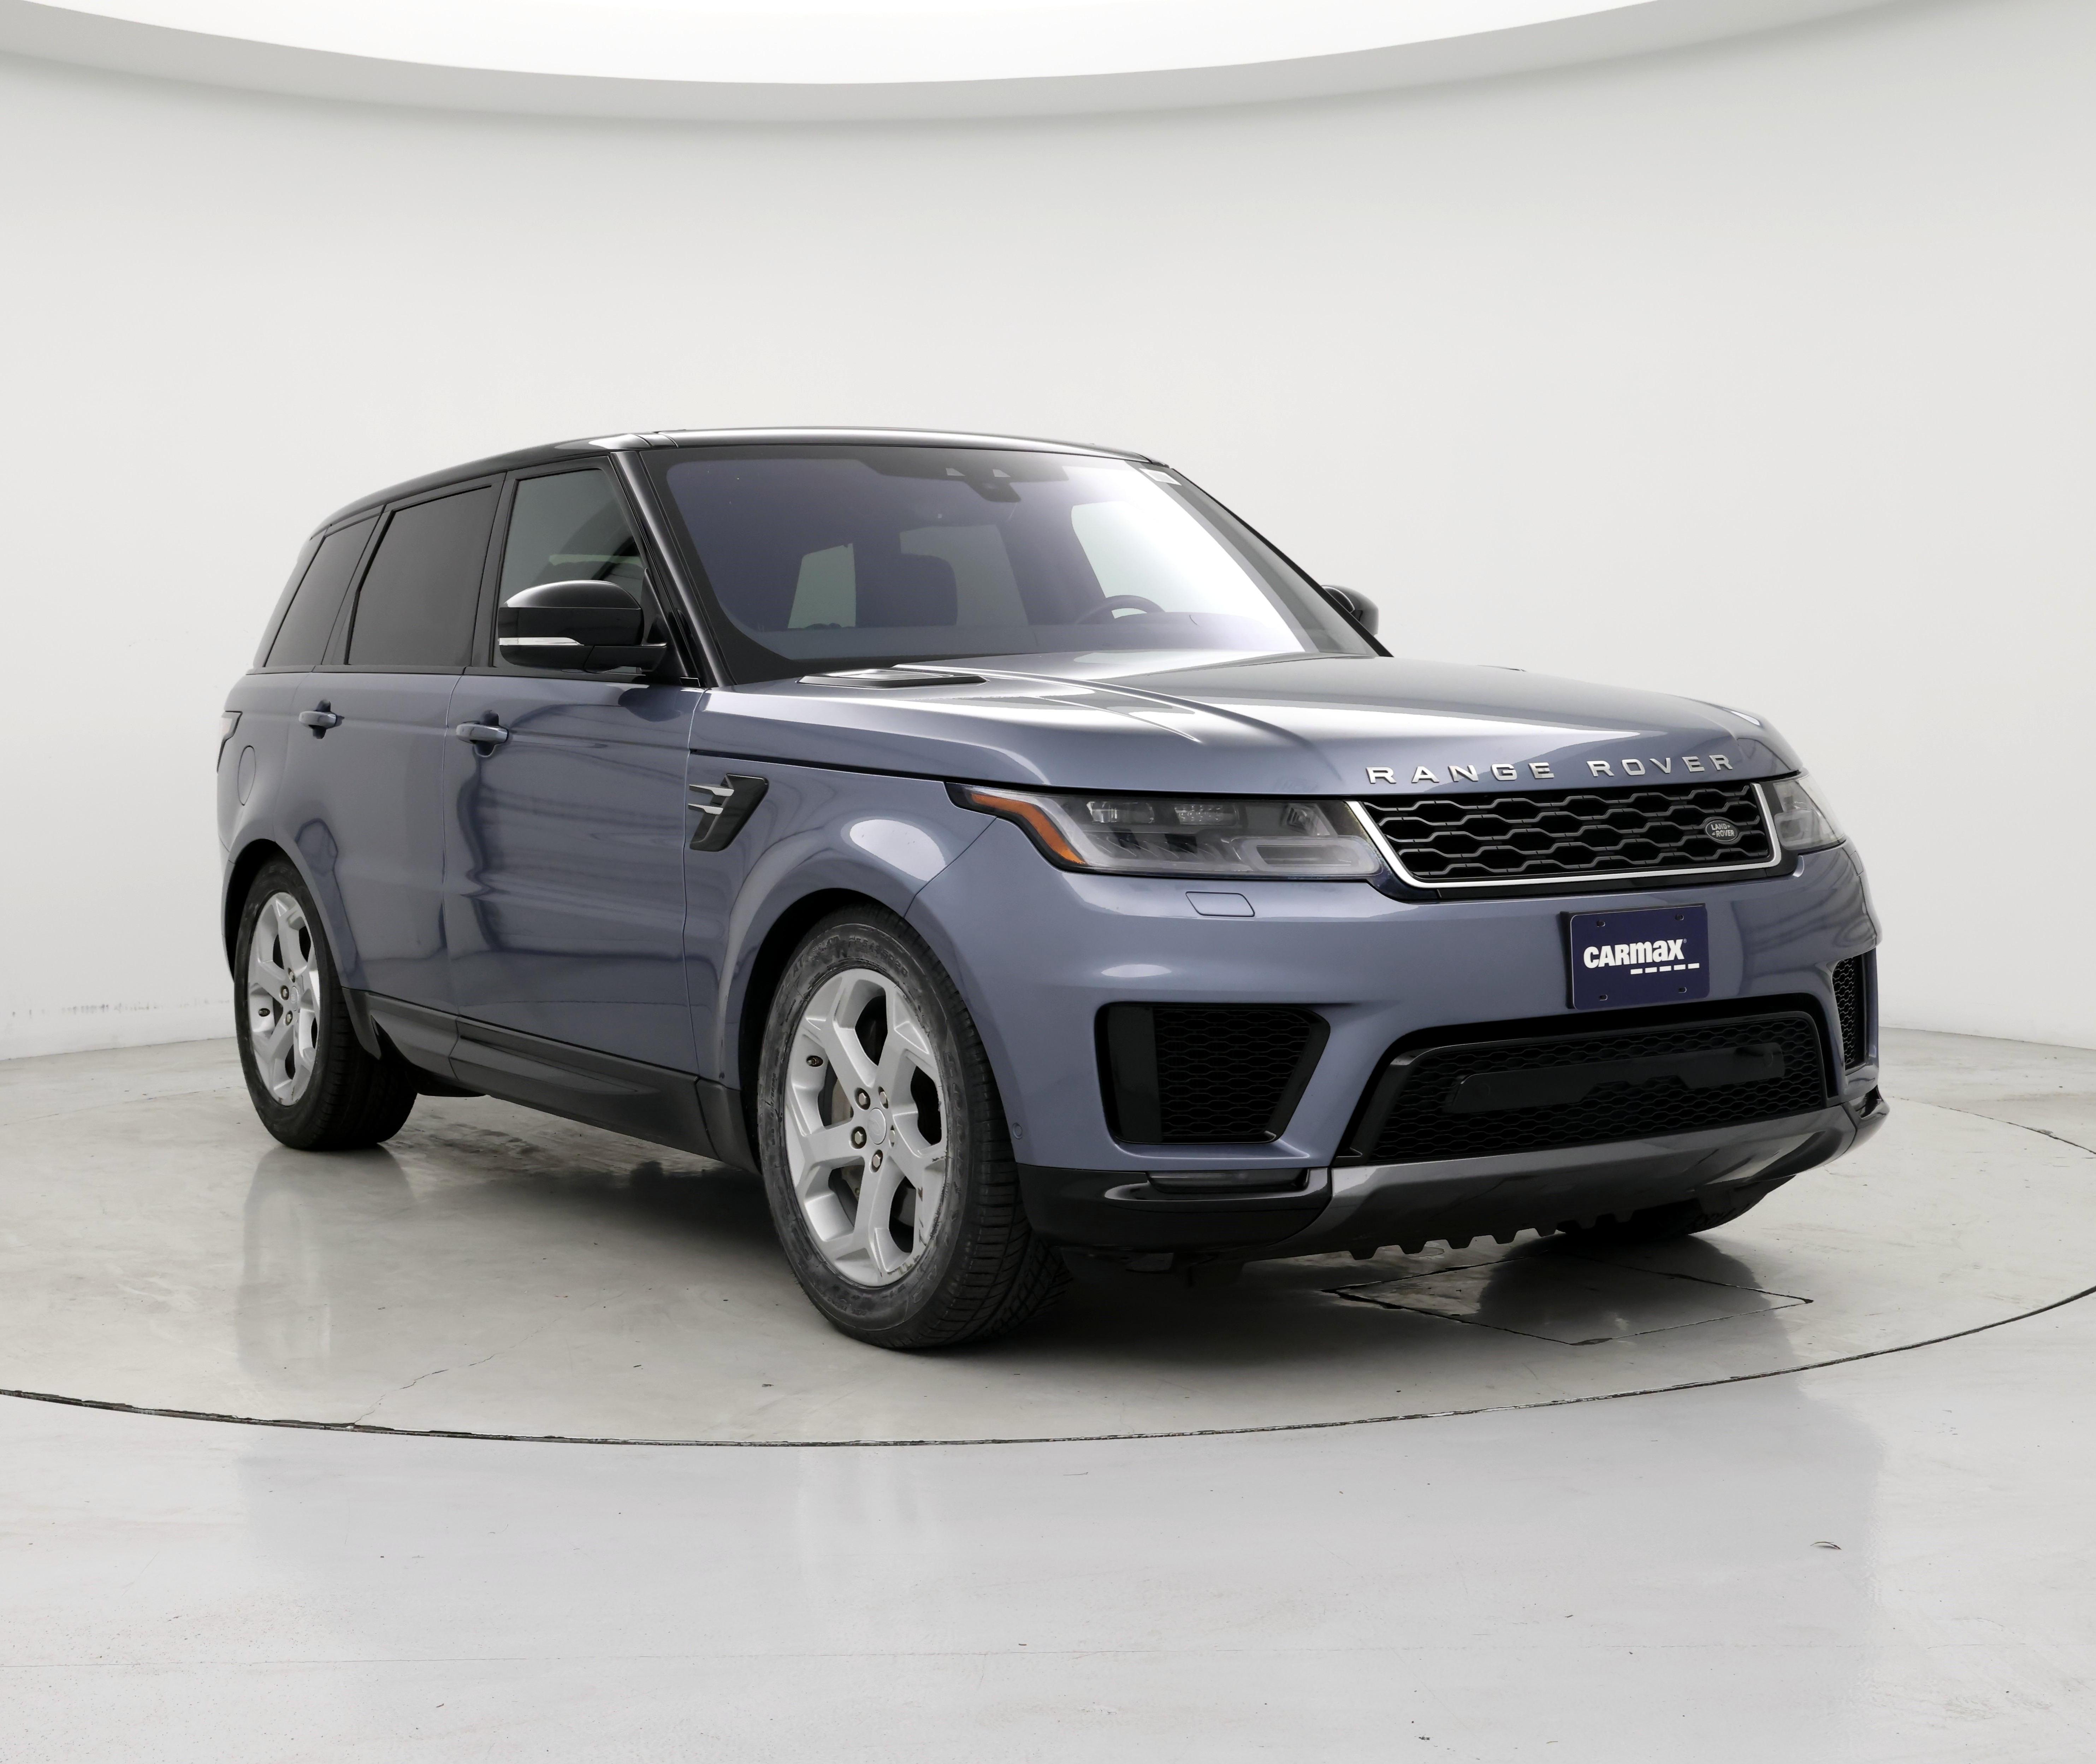 2019 Land Rover Range Rover Sport V6 HSE 4WD